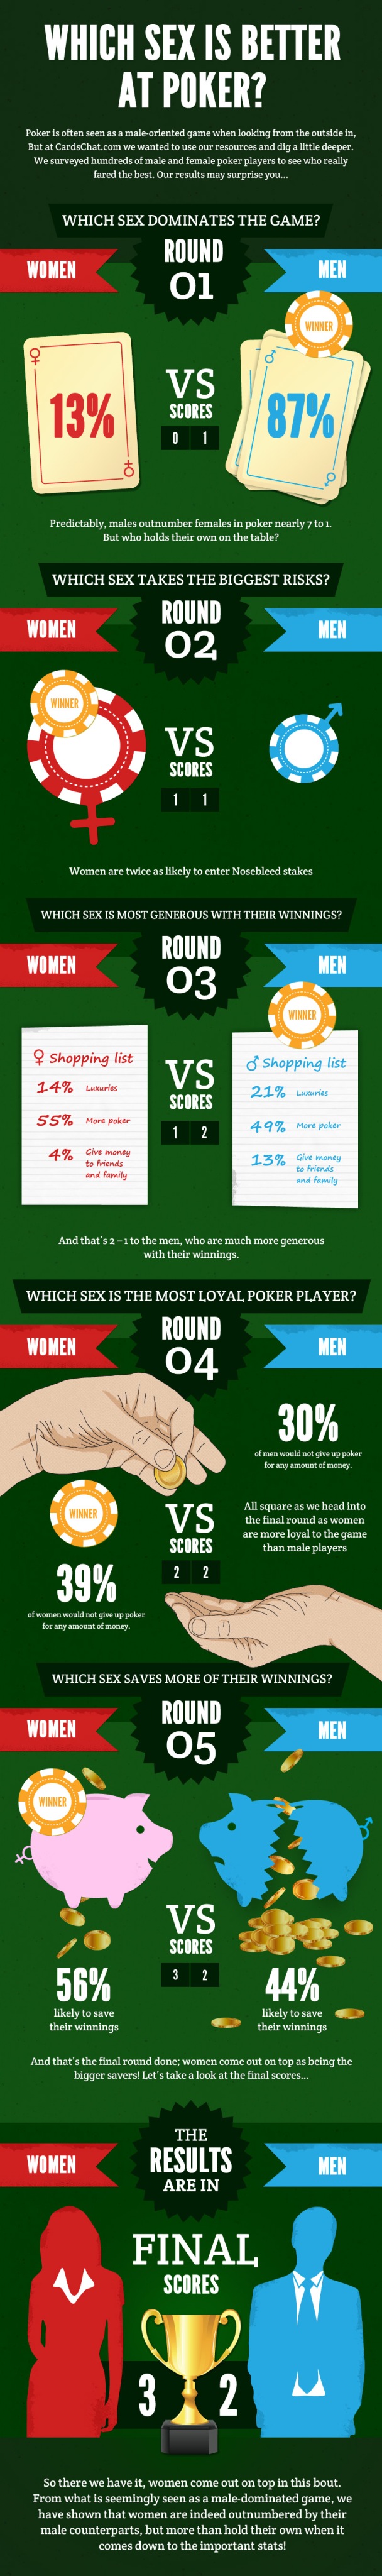 Battle of the Sexes - Canadian (Womens) Online Gambling